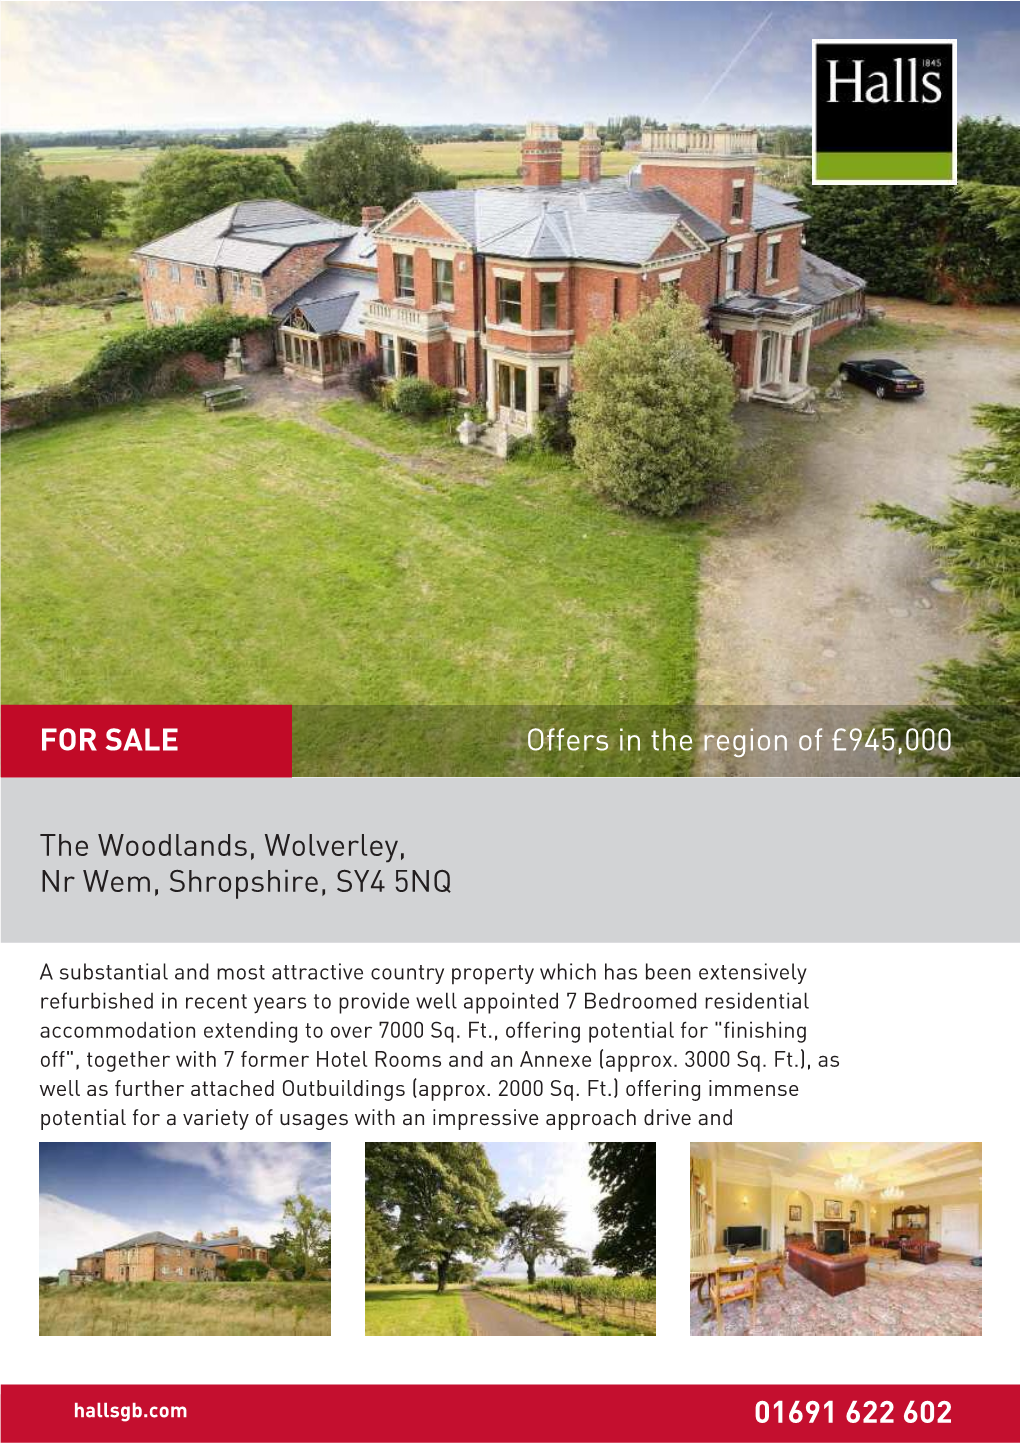 The Woodlands, Wolverley, Nr Wem, Shropshire, SY4 5NQ